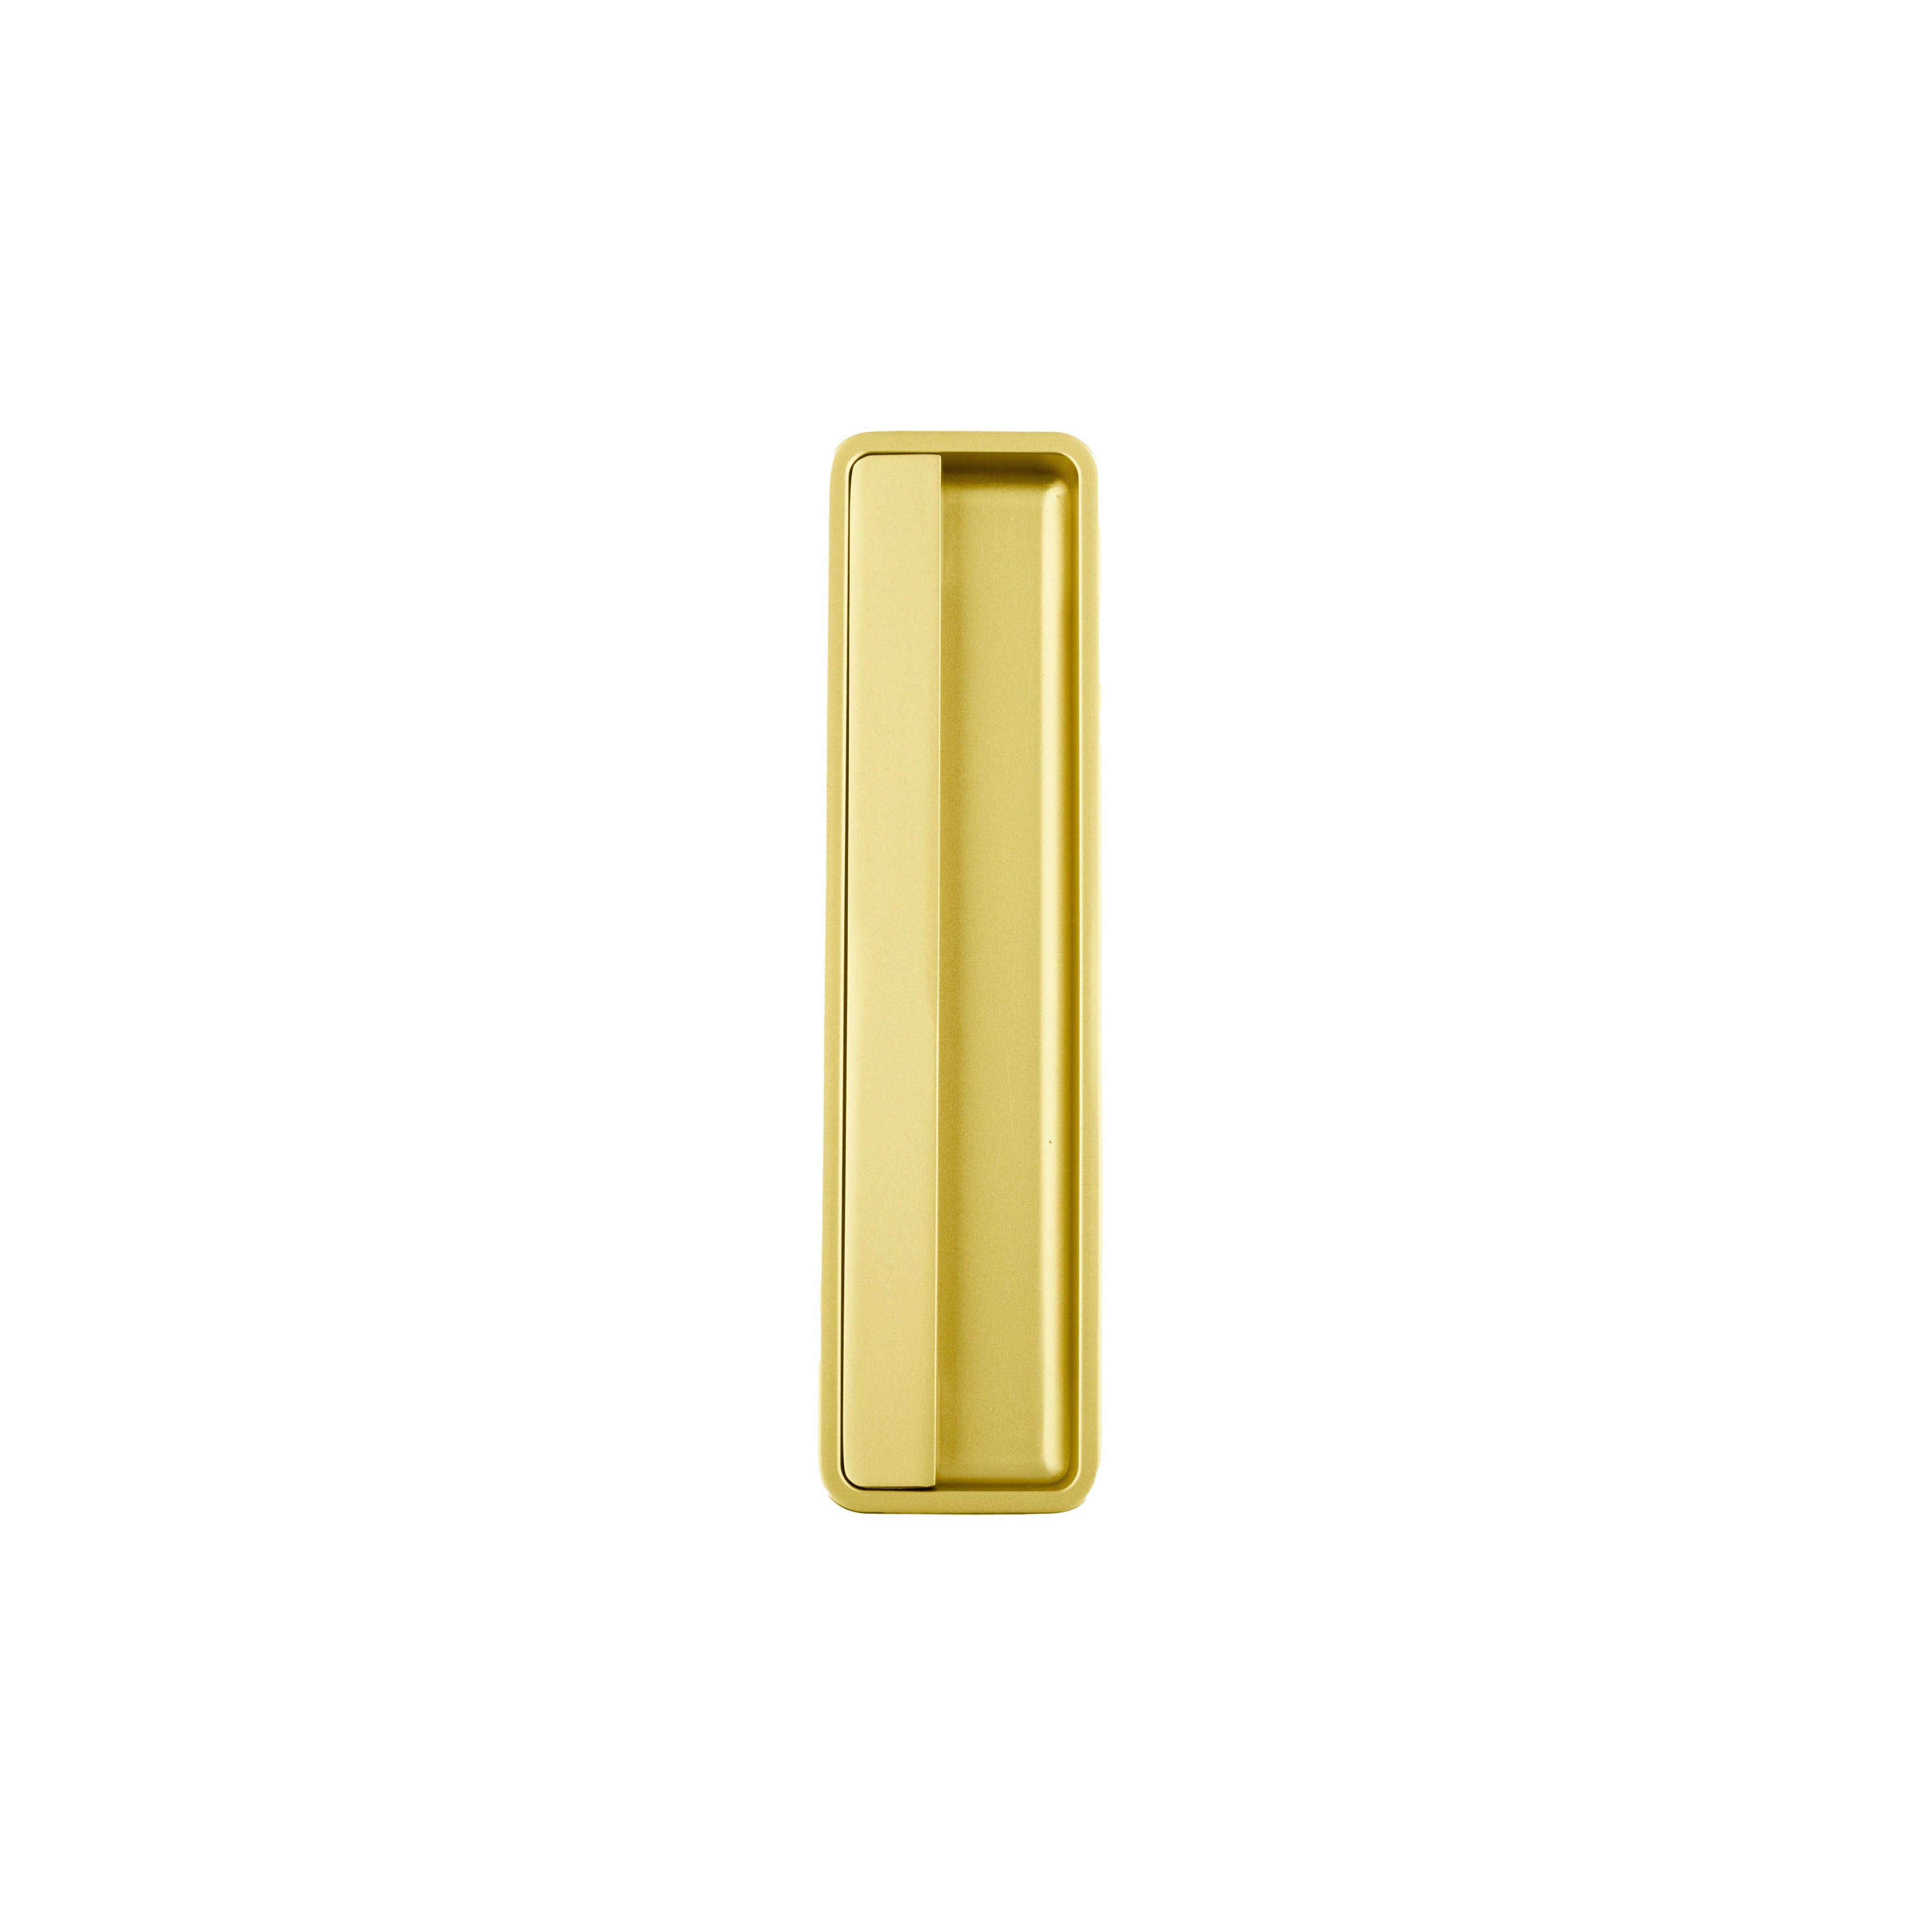 Concealed Semi Square Handle Knob 190mm / Gold / Zinc Alloy - M A N T A R A